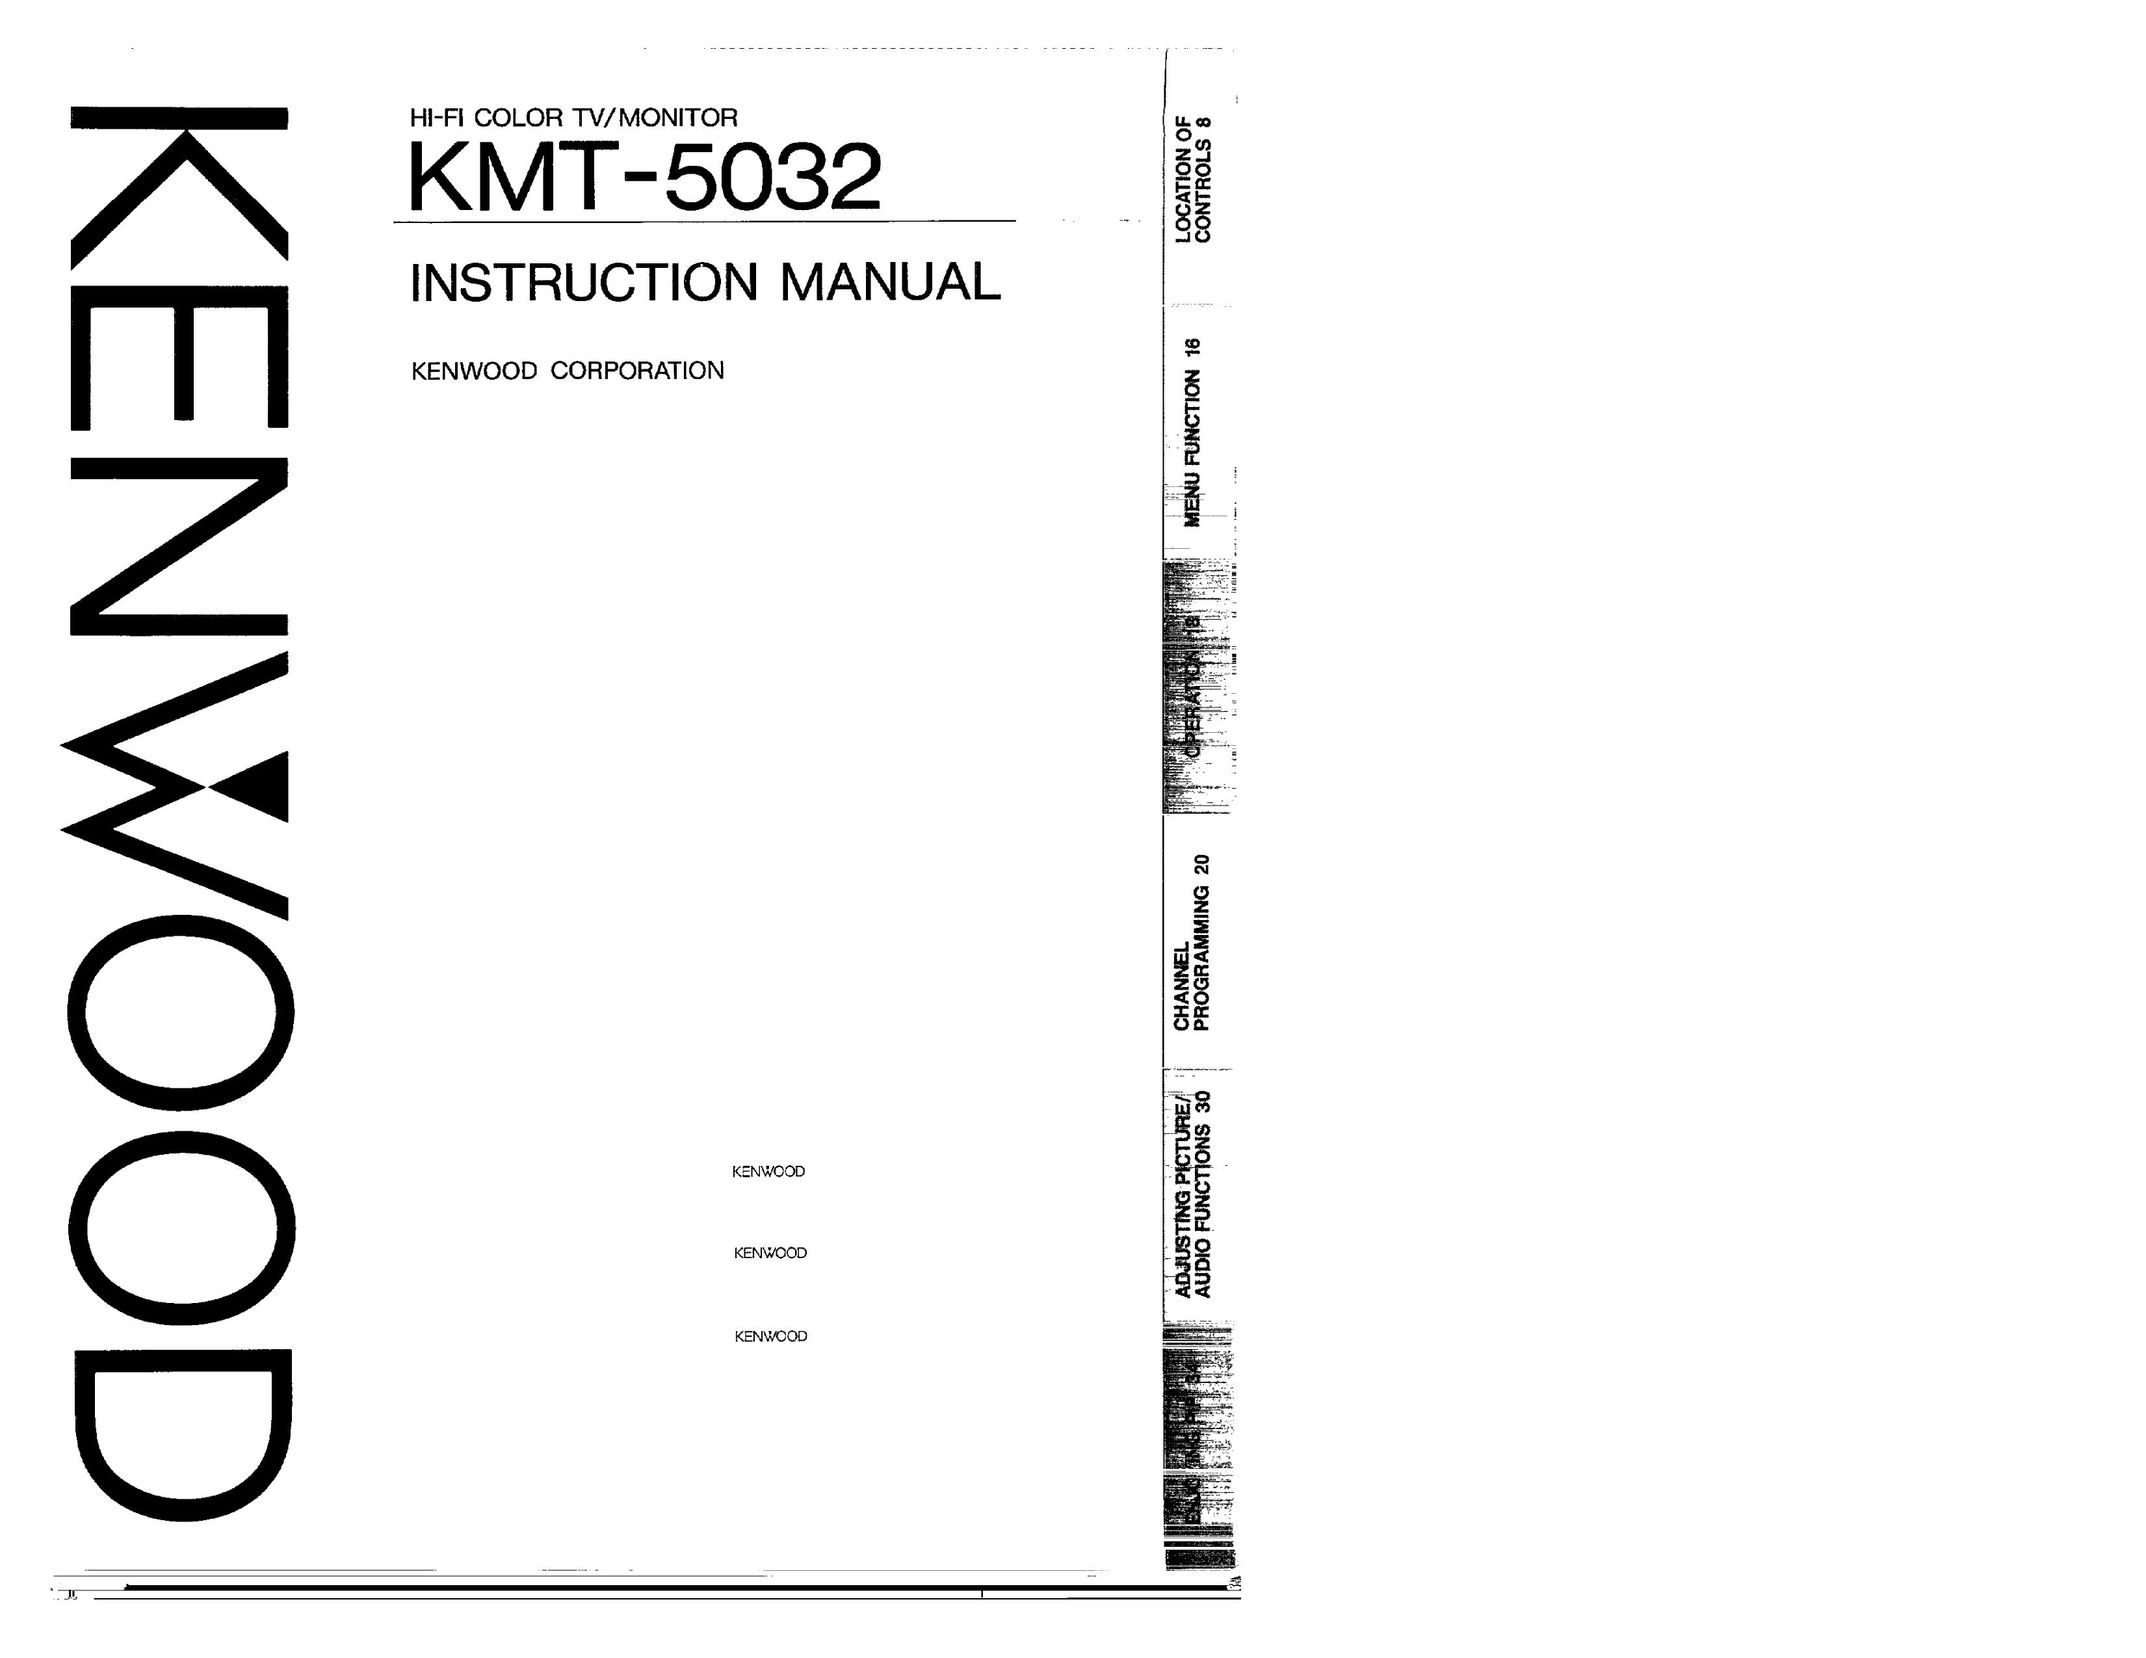 Kenwood KMT-5032 CRT Television User Manual (Page 1)